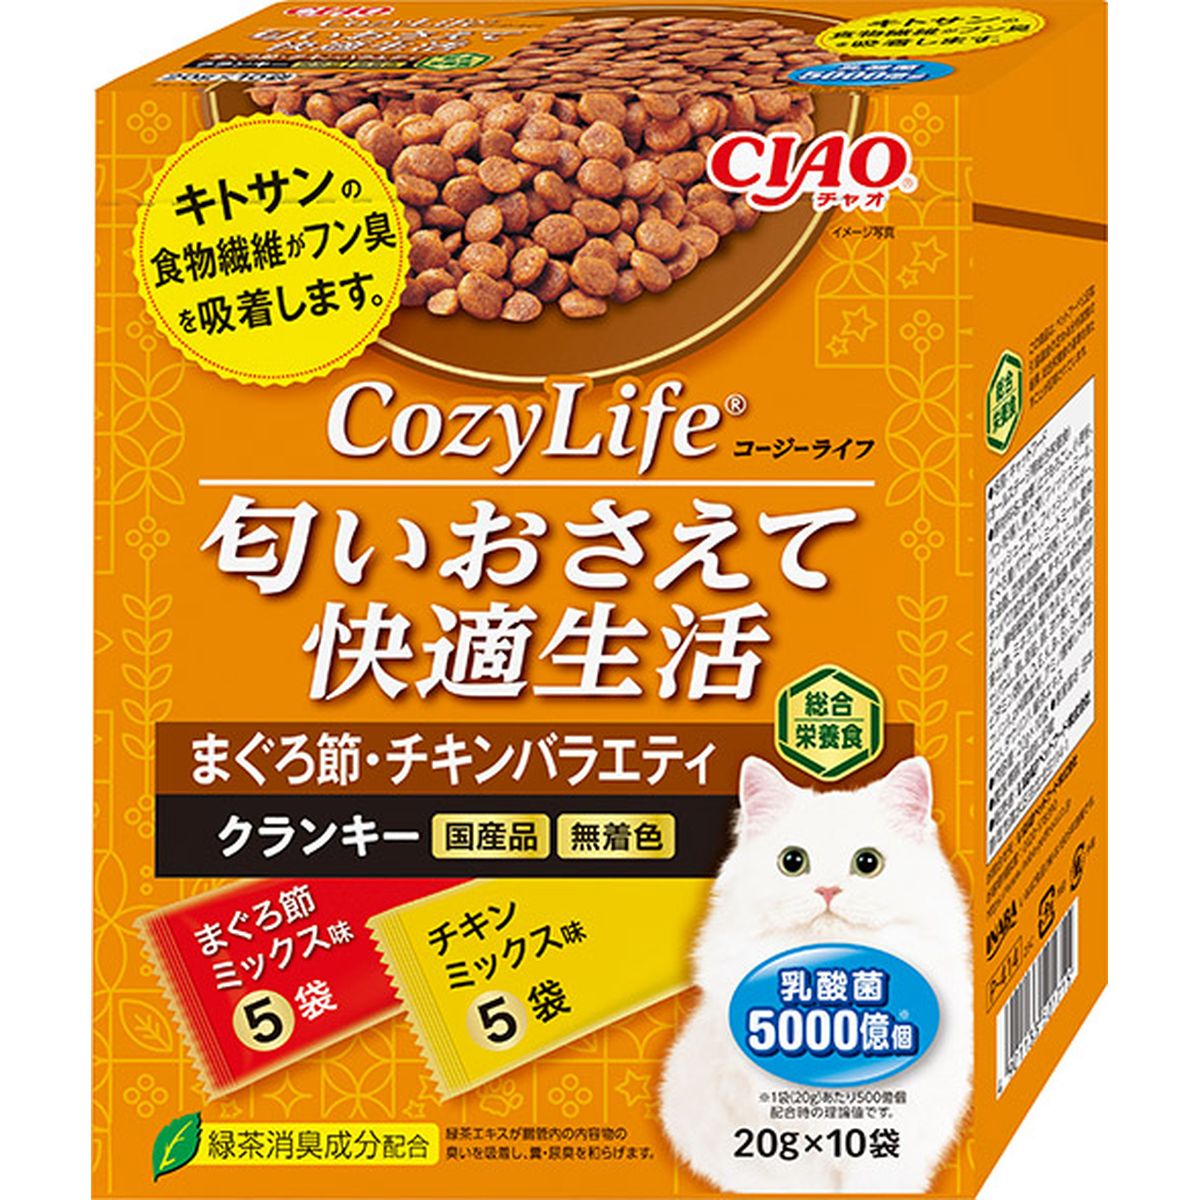 CIAO Cozy Life BOX マグロ･チキンバラエティ 20g×10袋×12